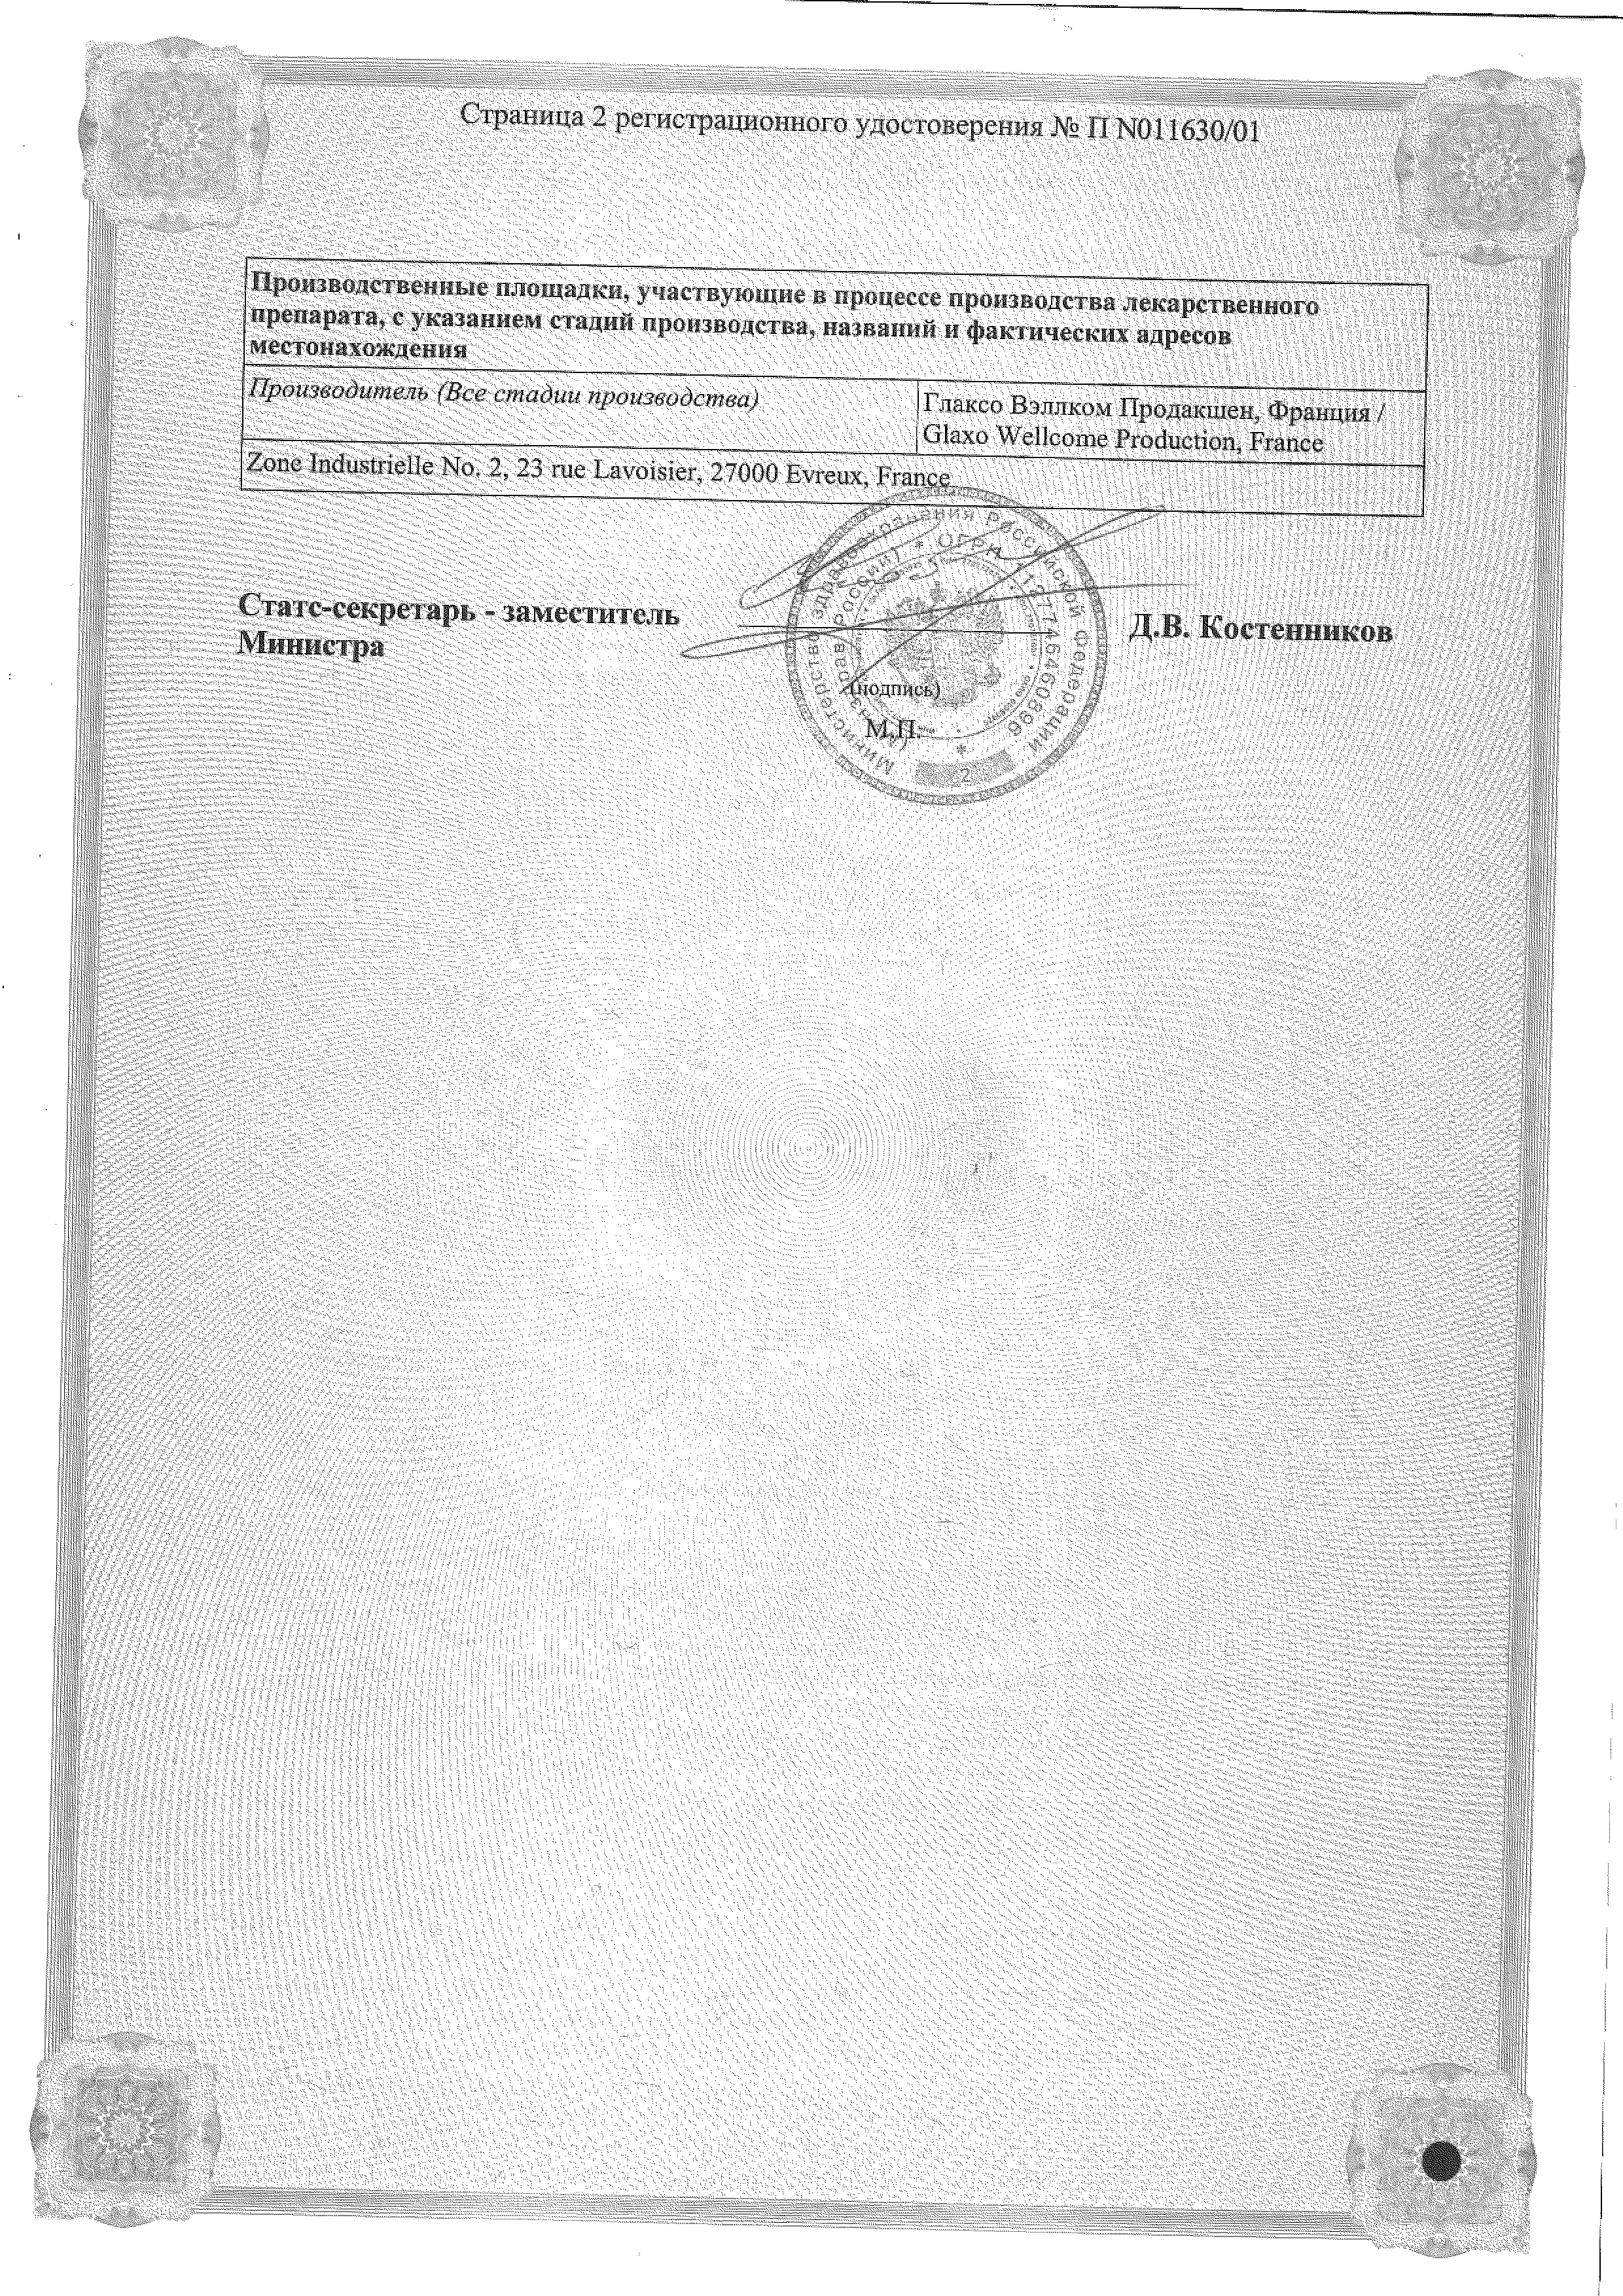 Серетид Мультидиск сертификат